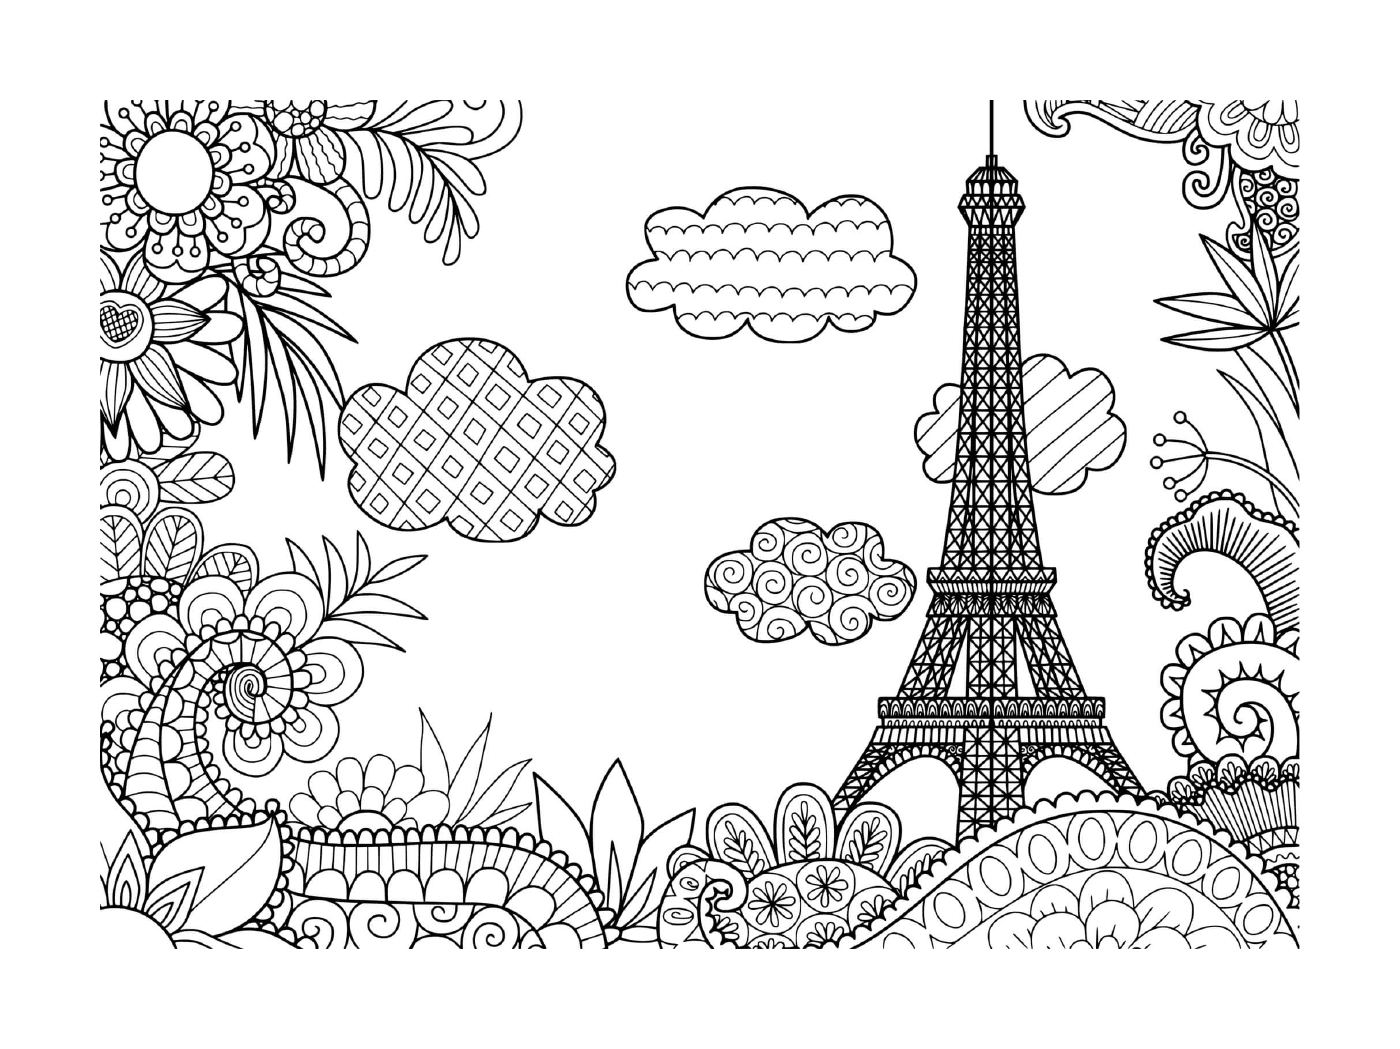  Mandala da Torre Eiffel em Paris 